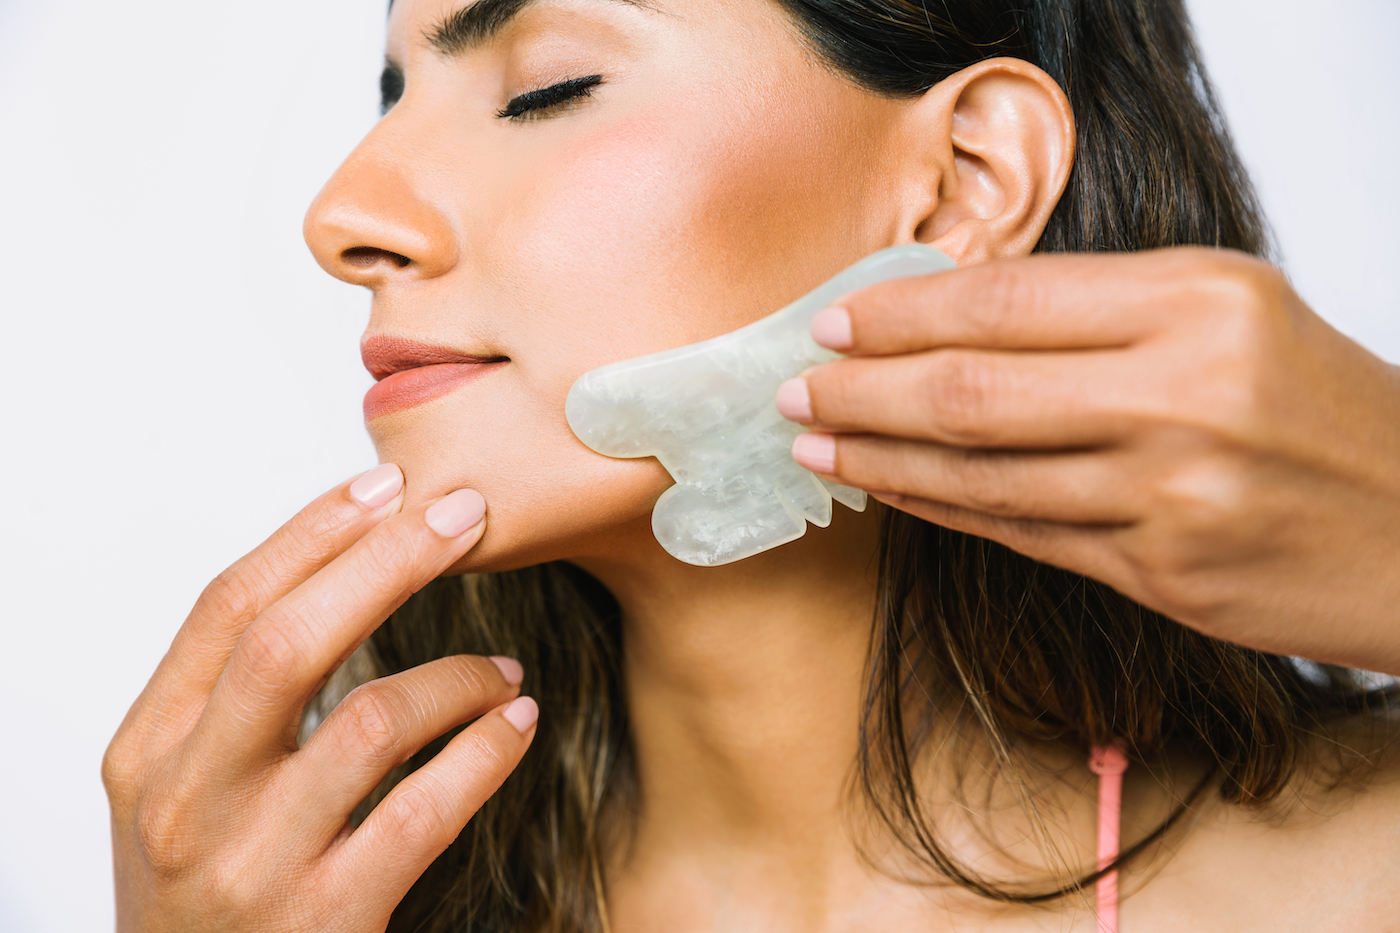 dermatologist skin-care questions